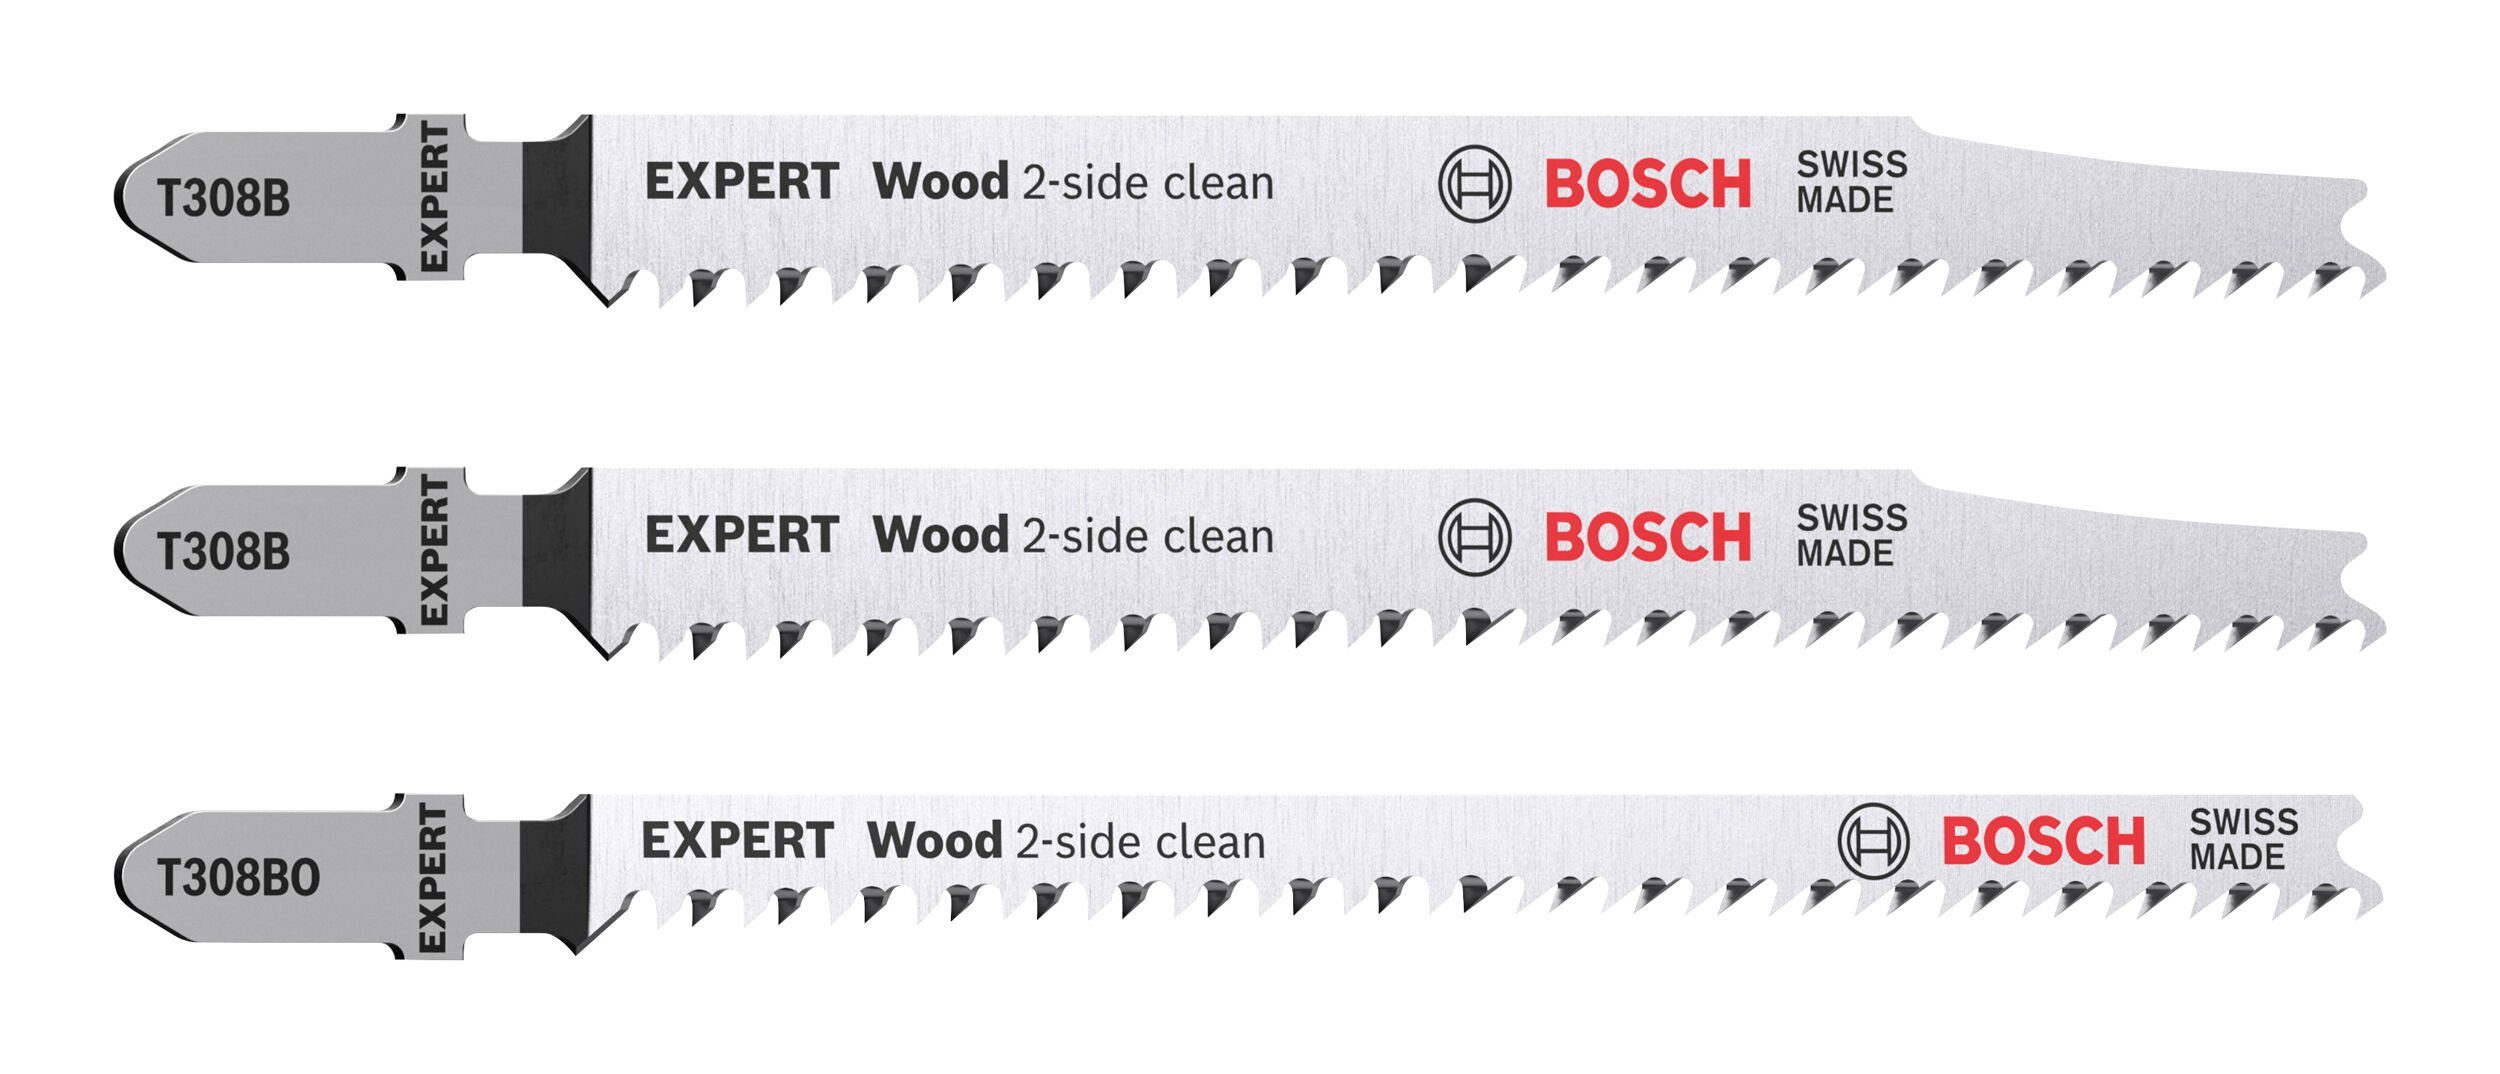 Stichsägeblatt Wood - Extra-Clean for Expert 3-teilig Set Expert BOSCH 2-side, Wood